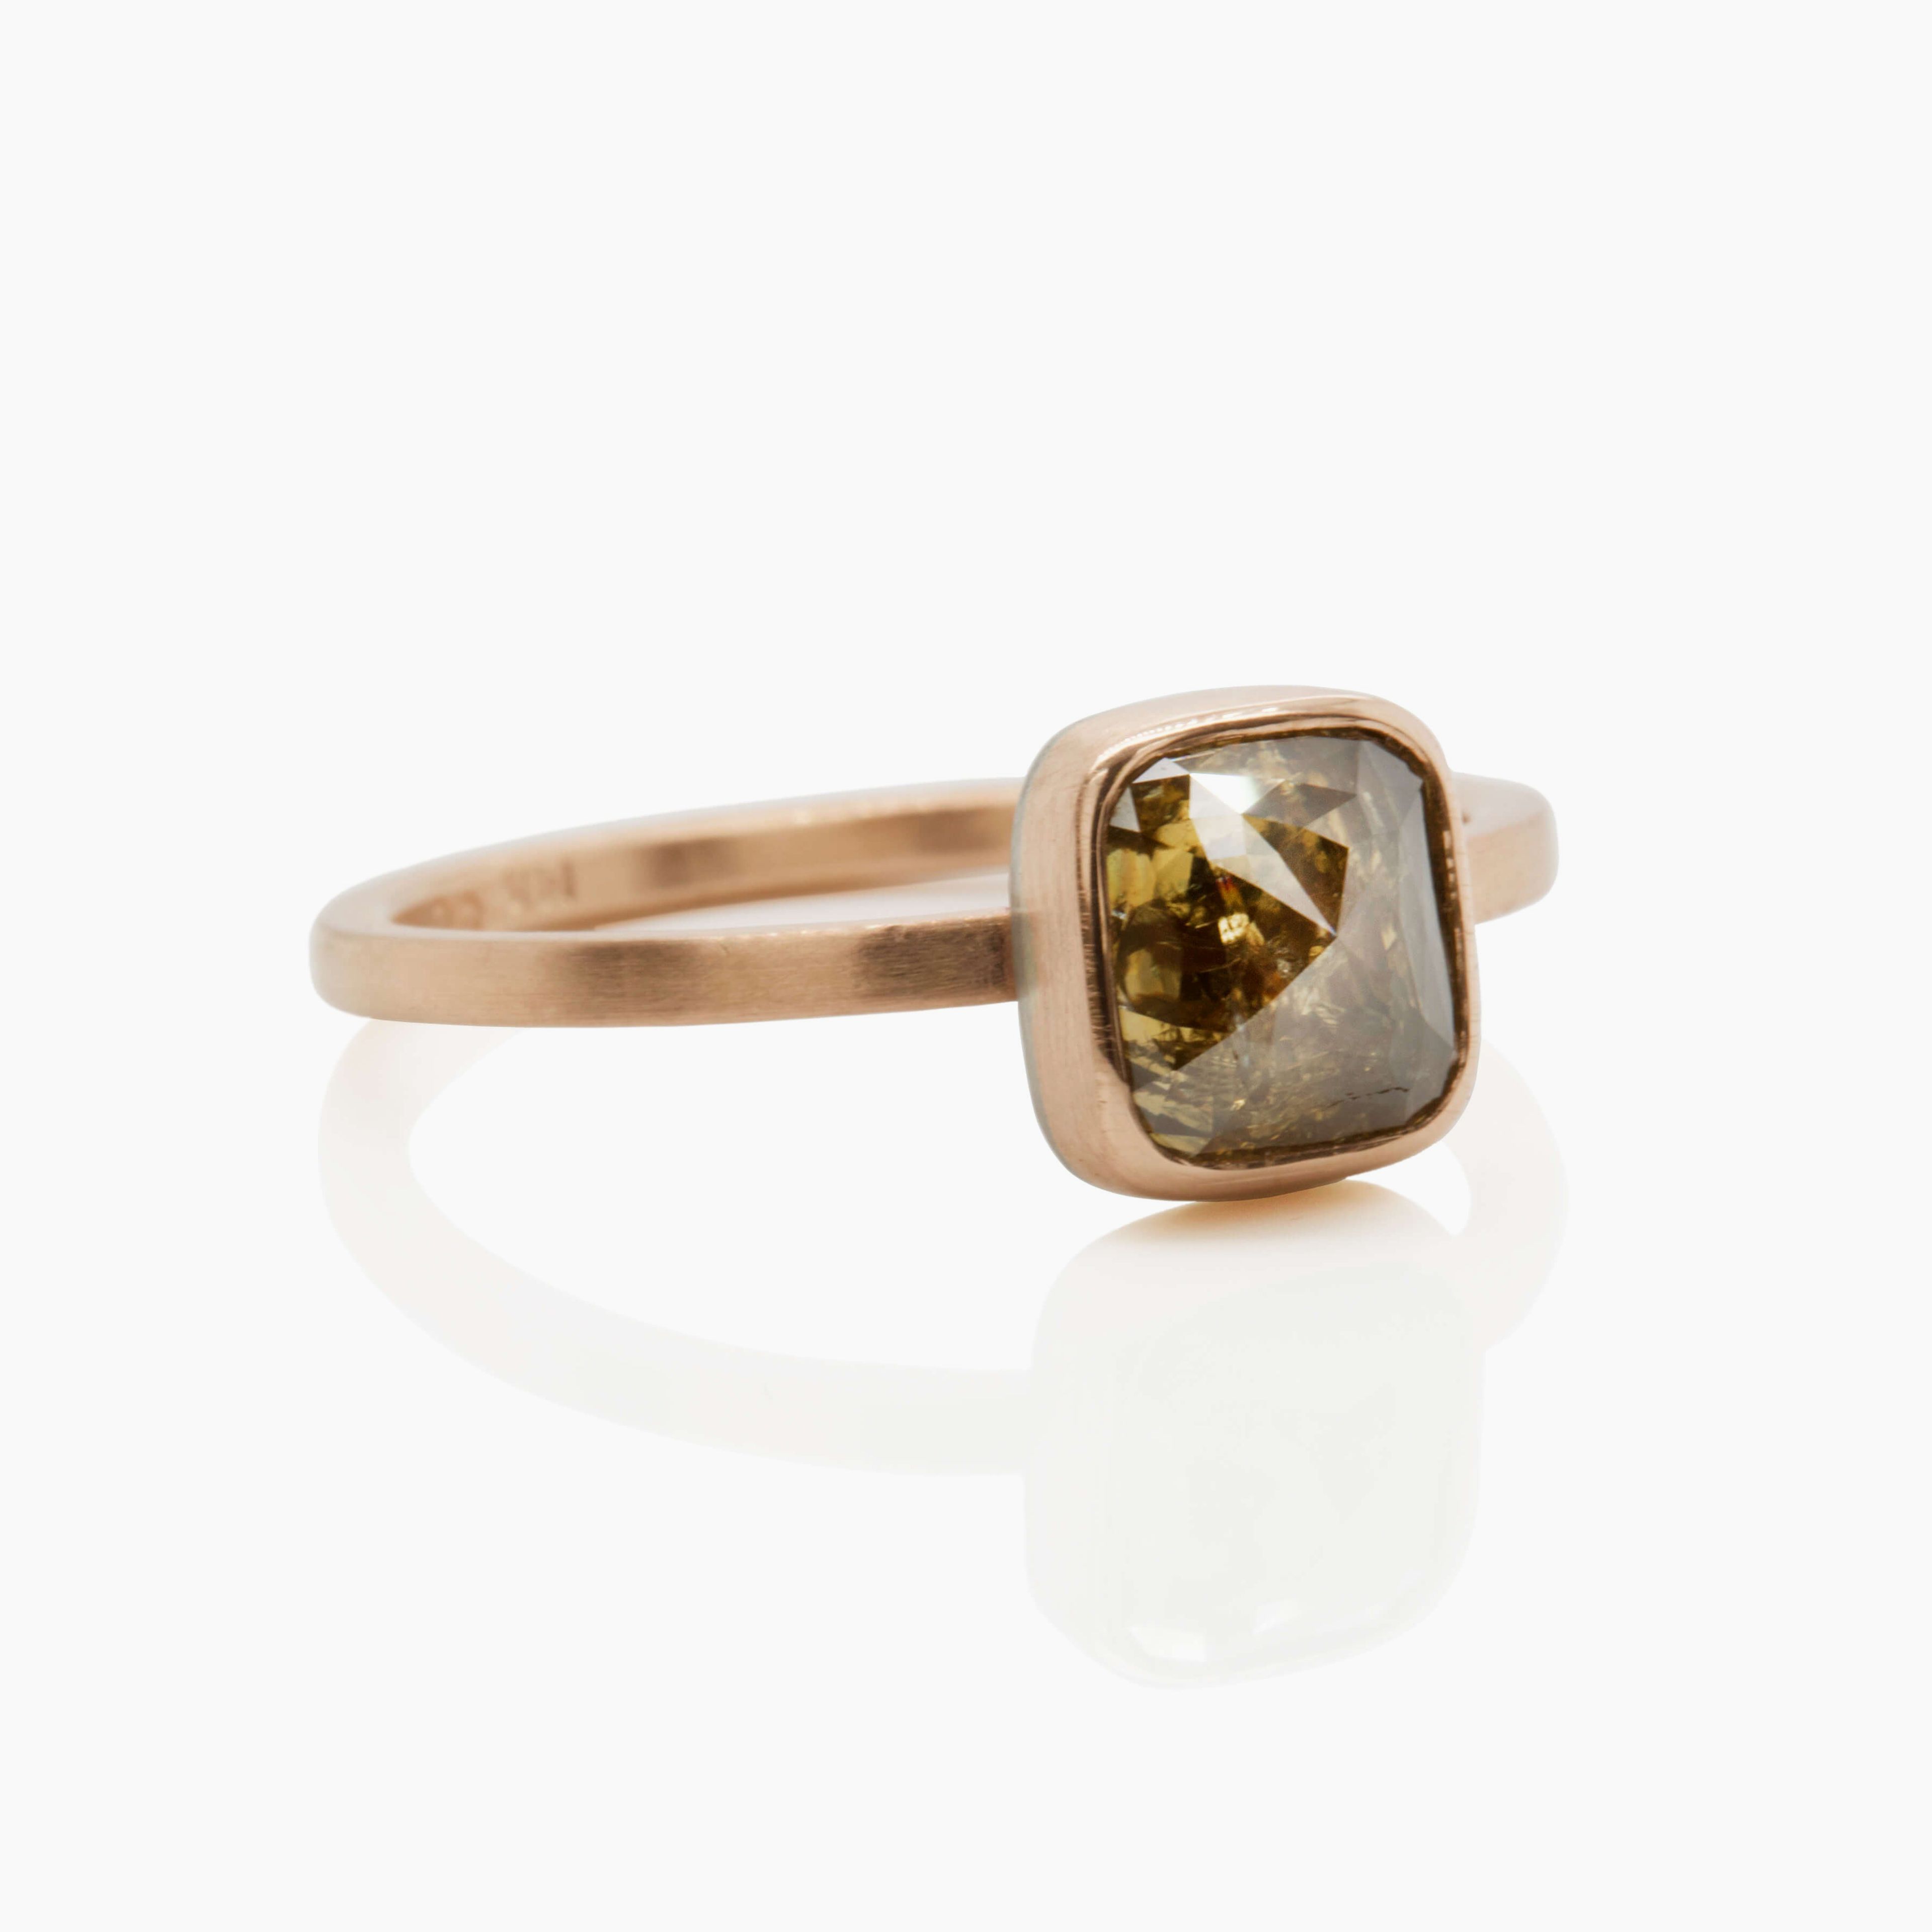 Brown Cushion Cut Diamond Ring in Rose Gold